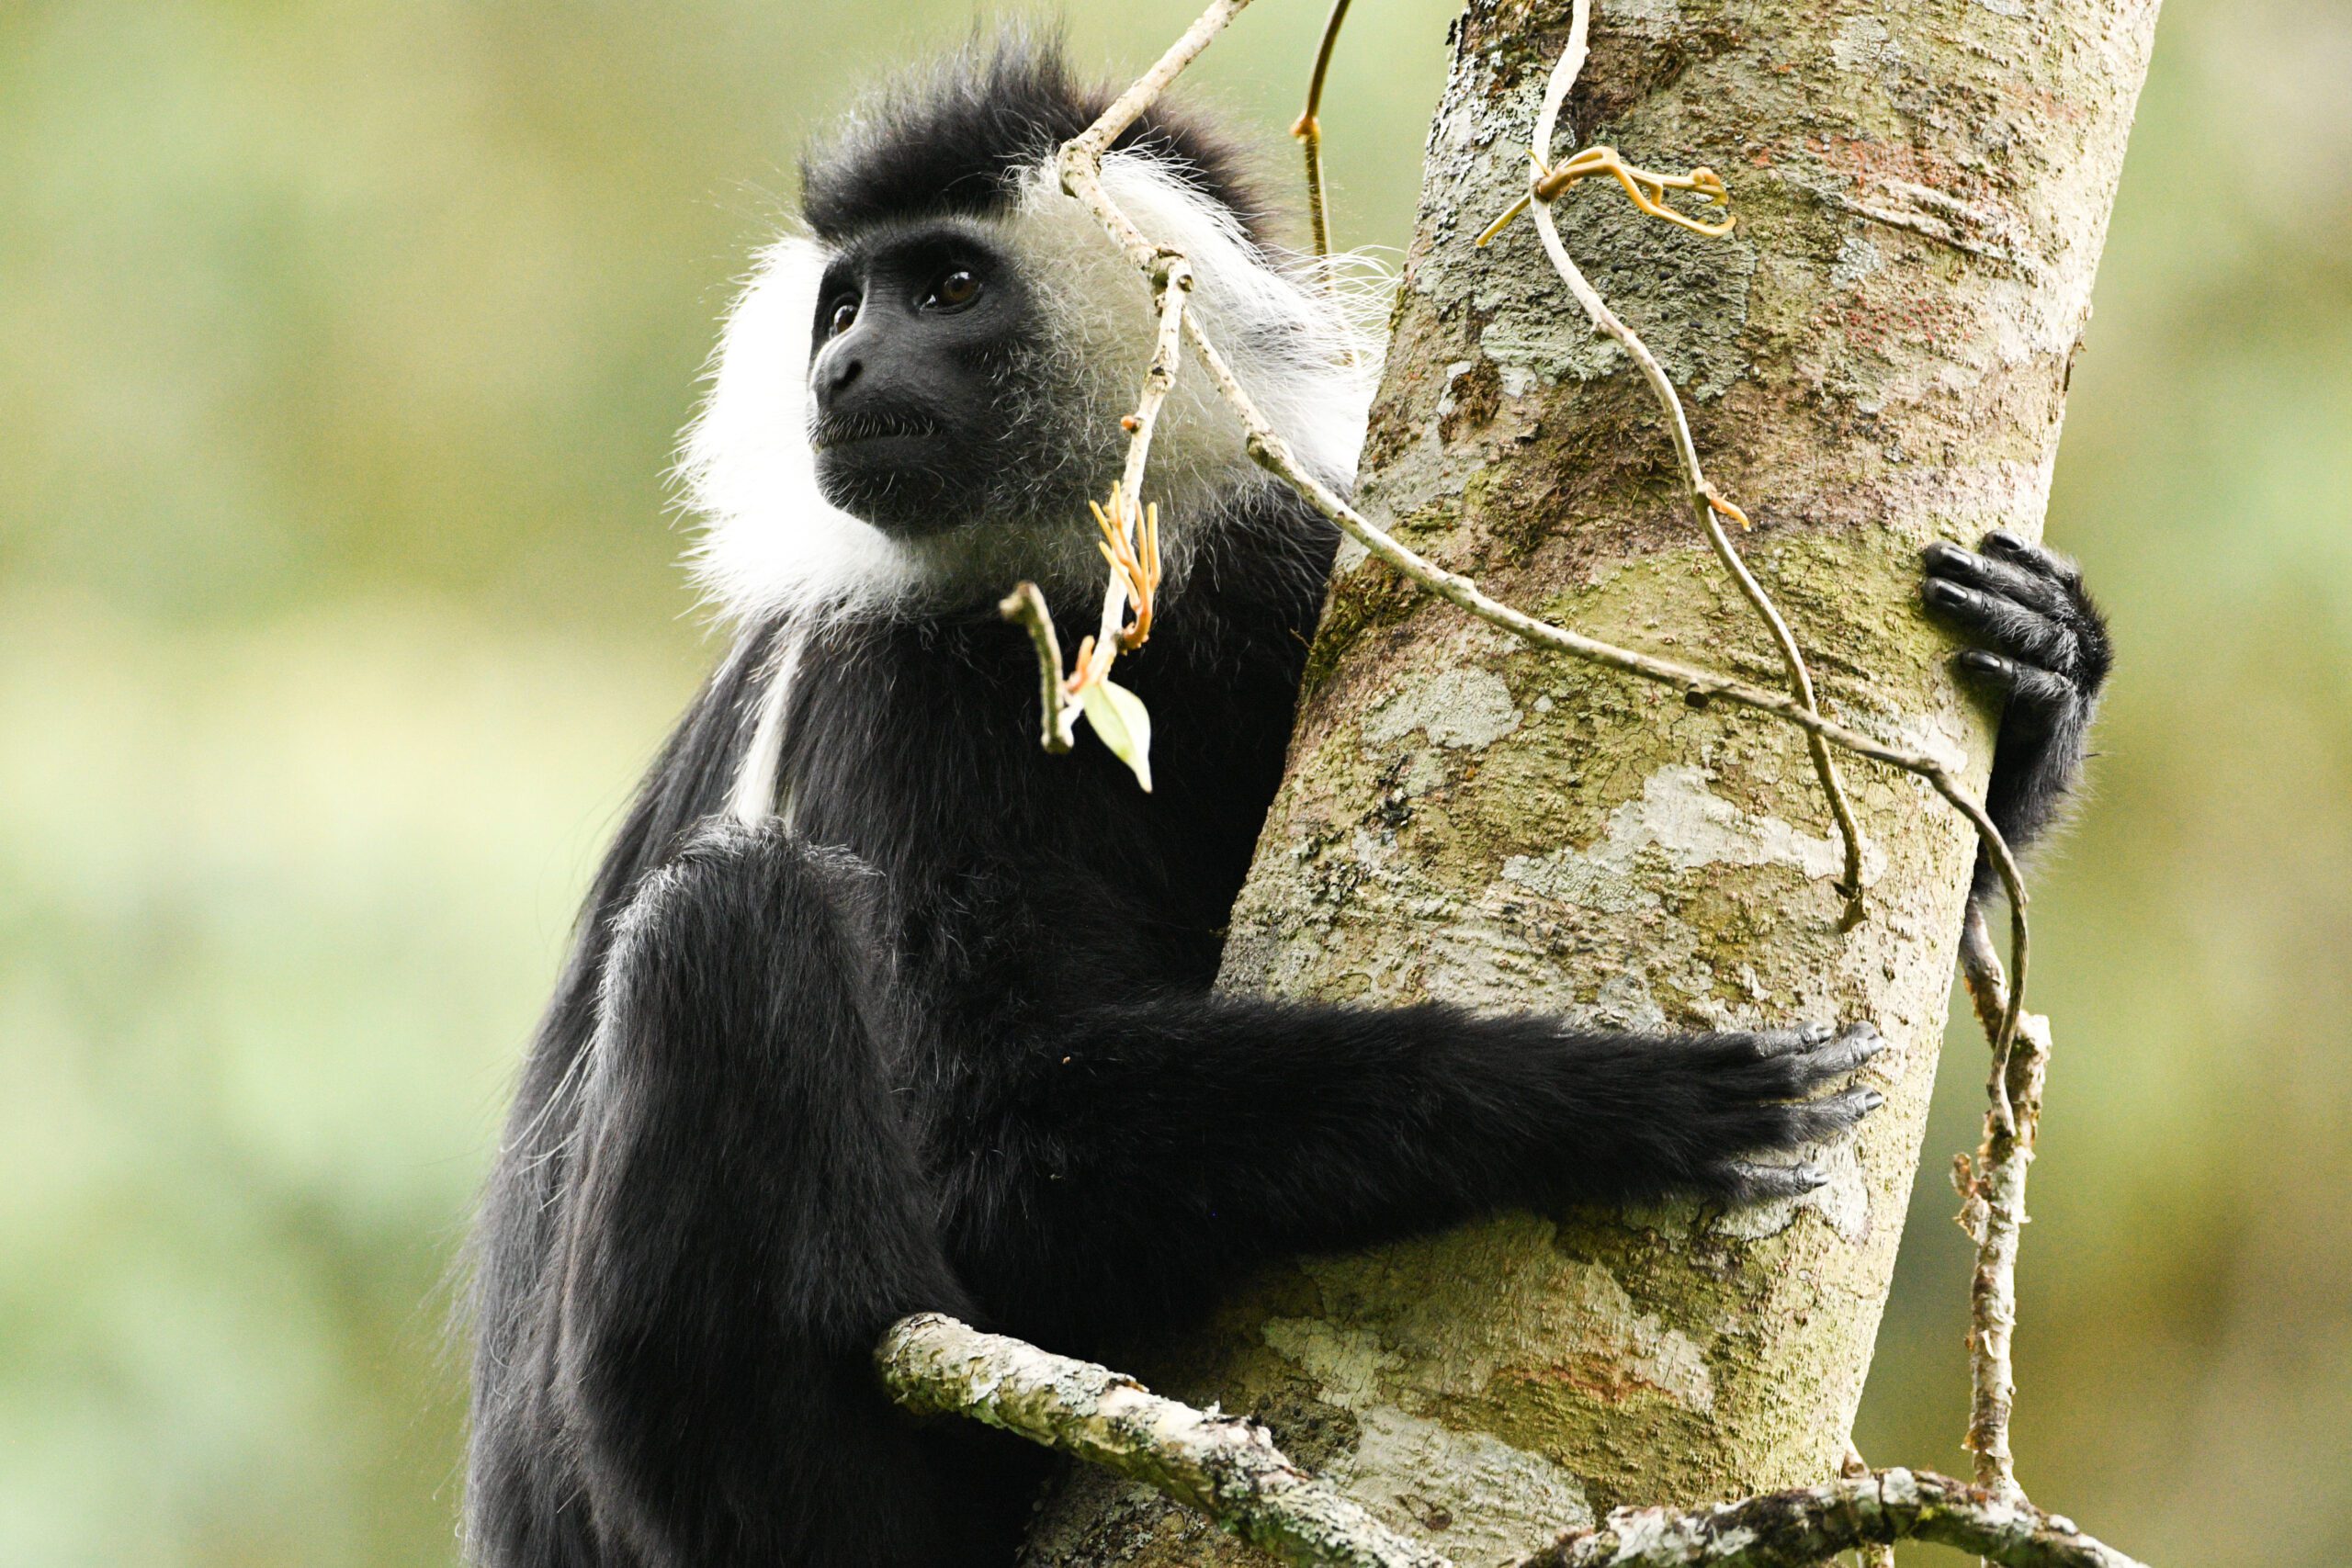 Black and white colobus monkeys